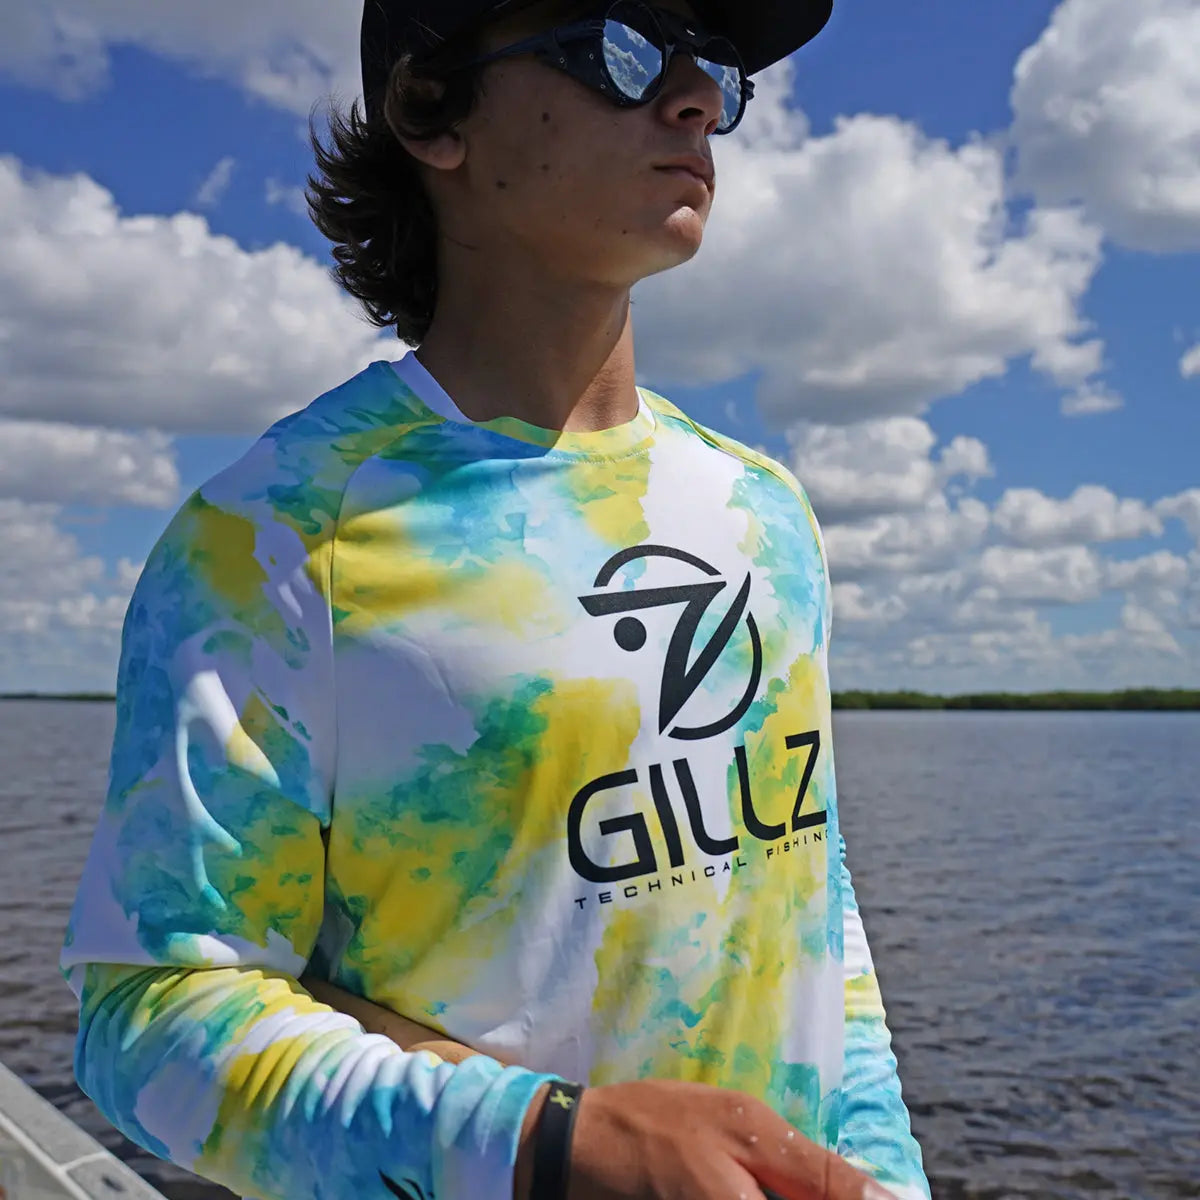 Gillz Contender Series Mahi DPM UV Long Sleeve T-Shirt - Blazing Yellow Gillz